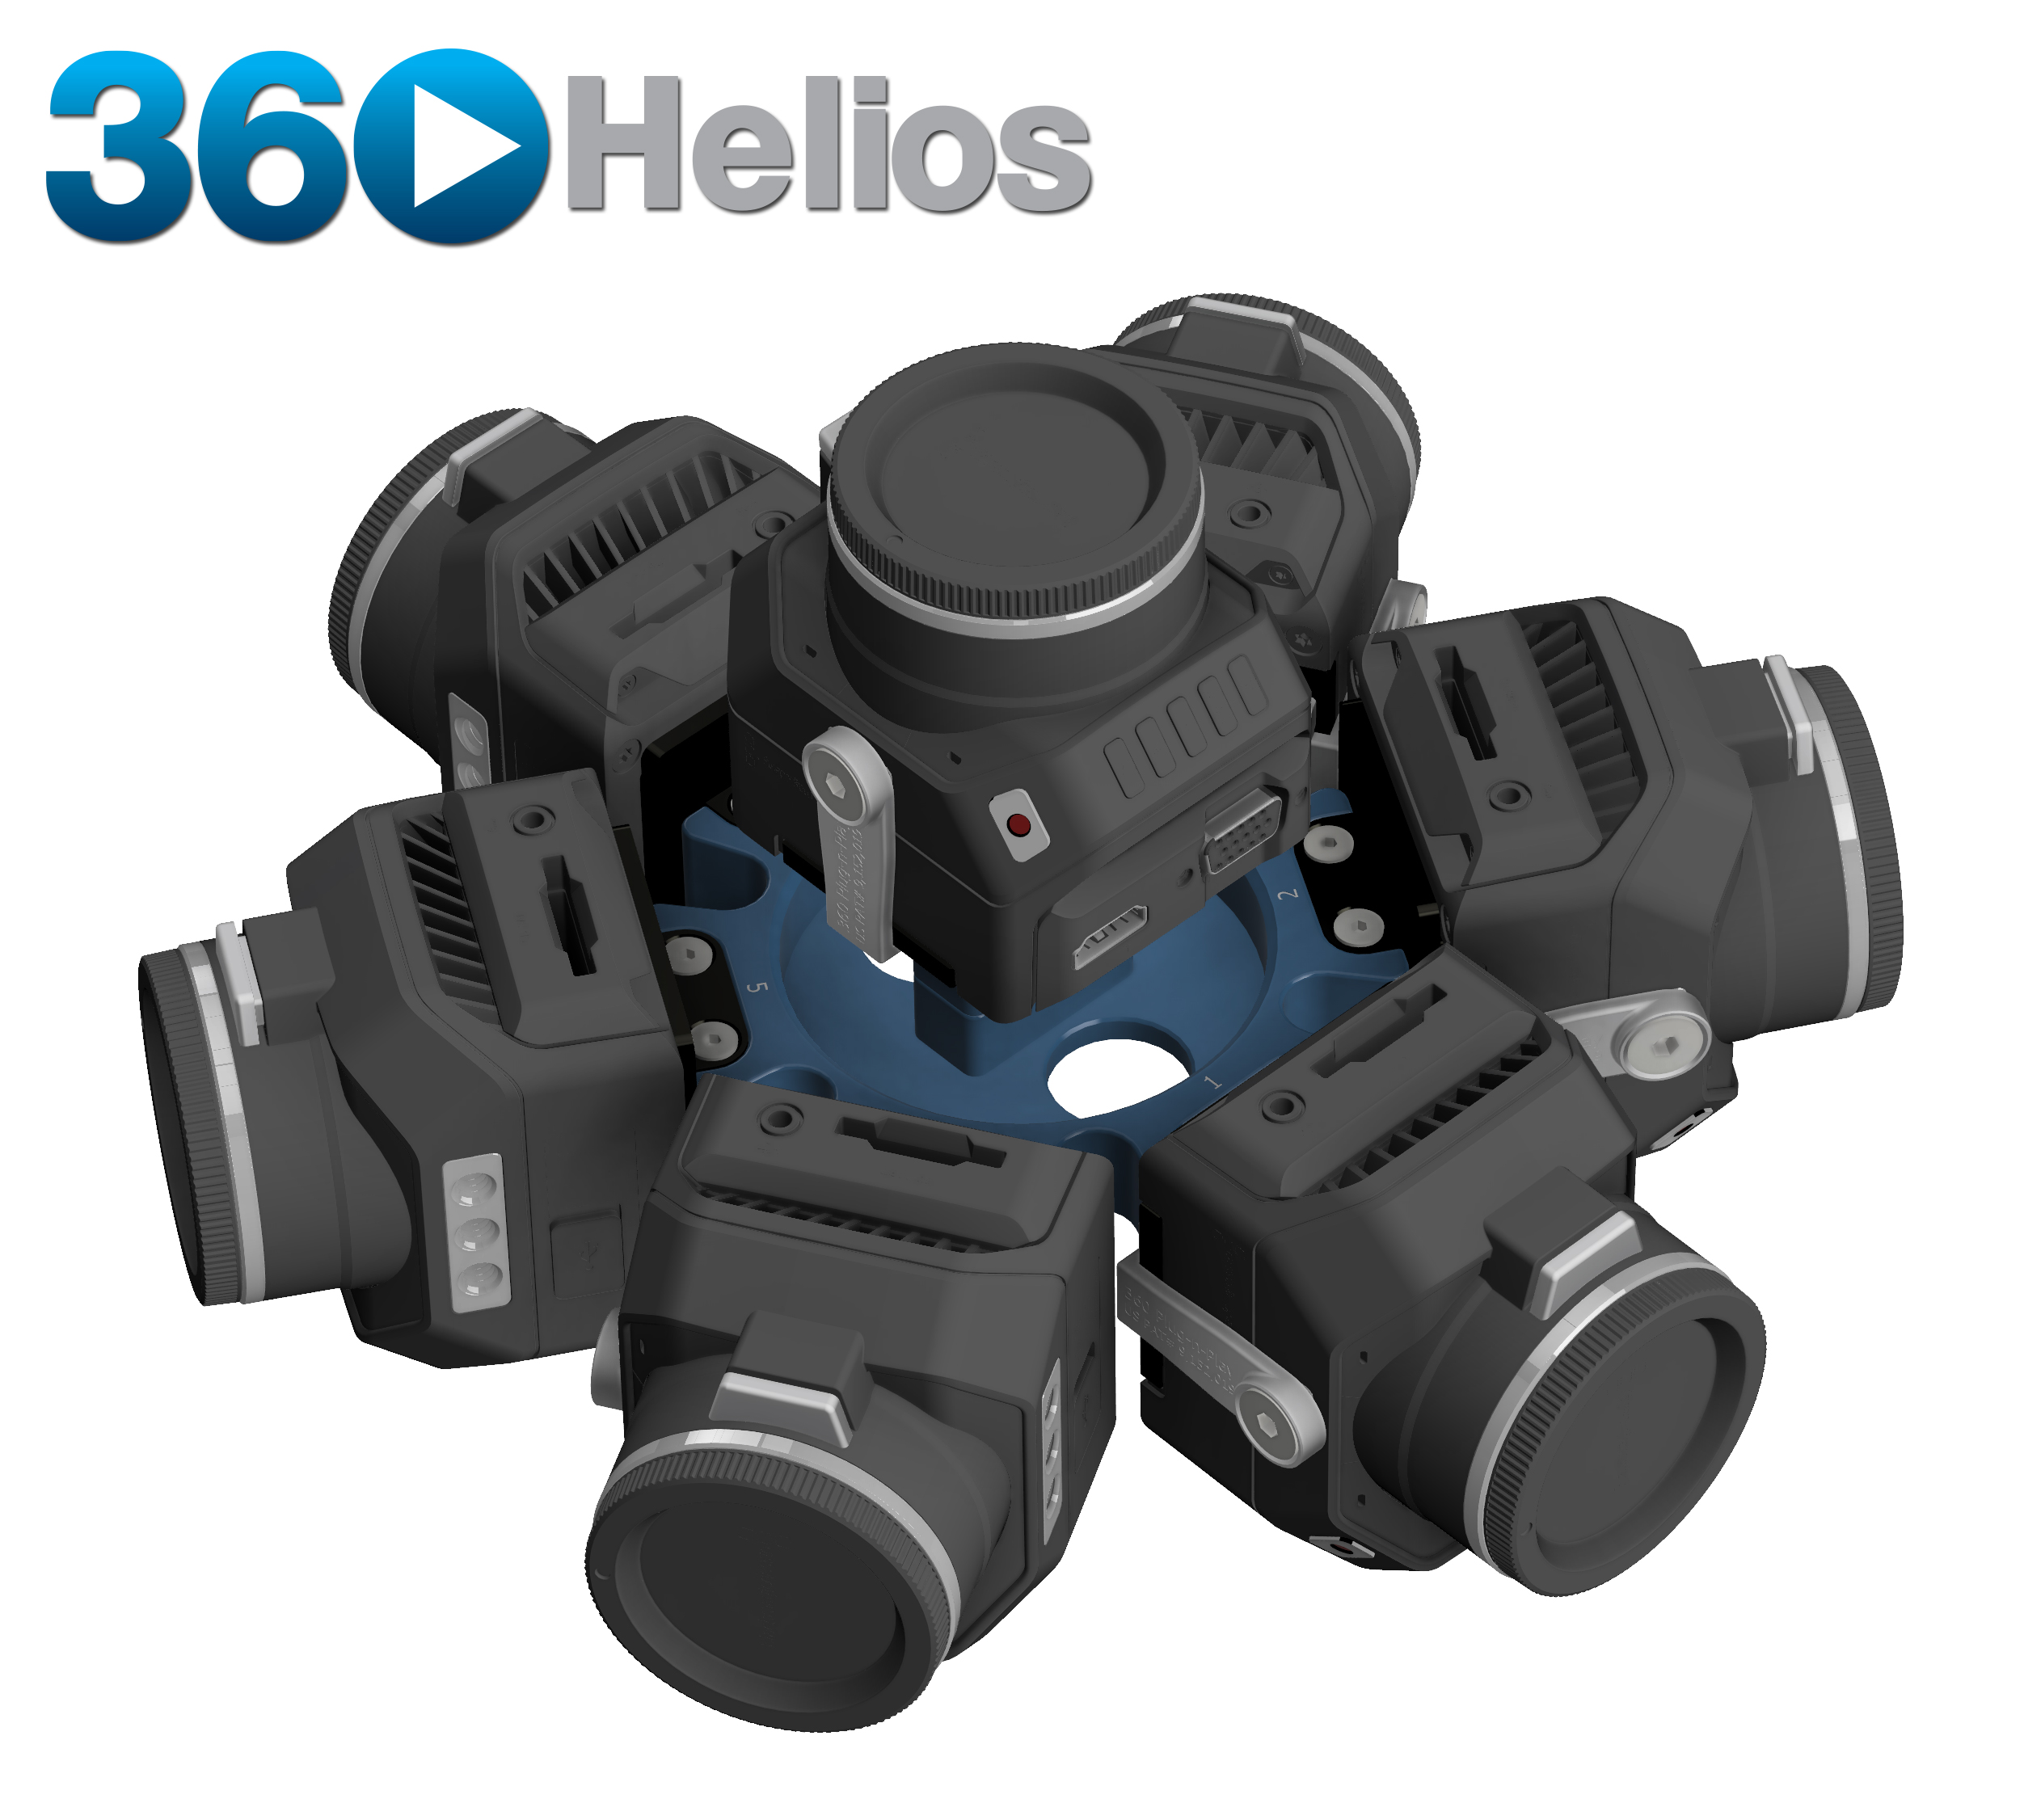 360Heros Debuting Blackmagic Design Virtual Reality 360 Video Camera